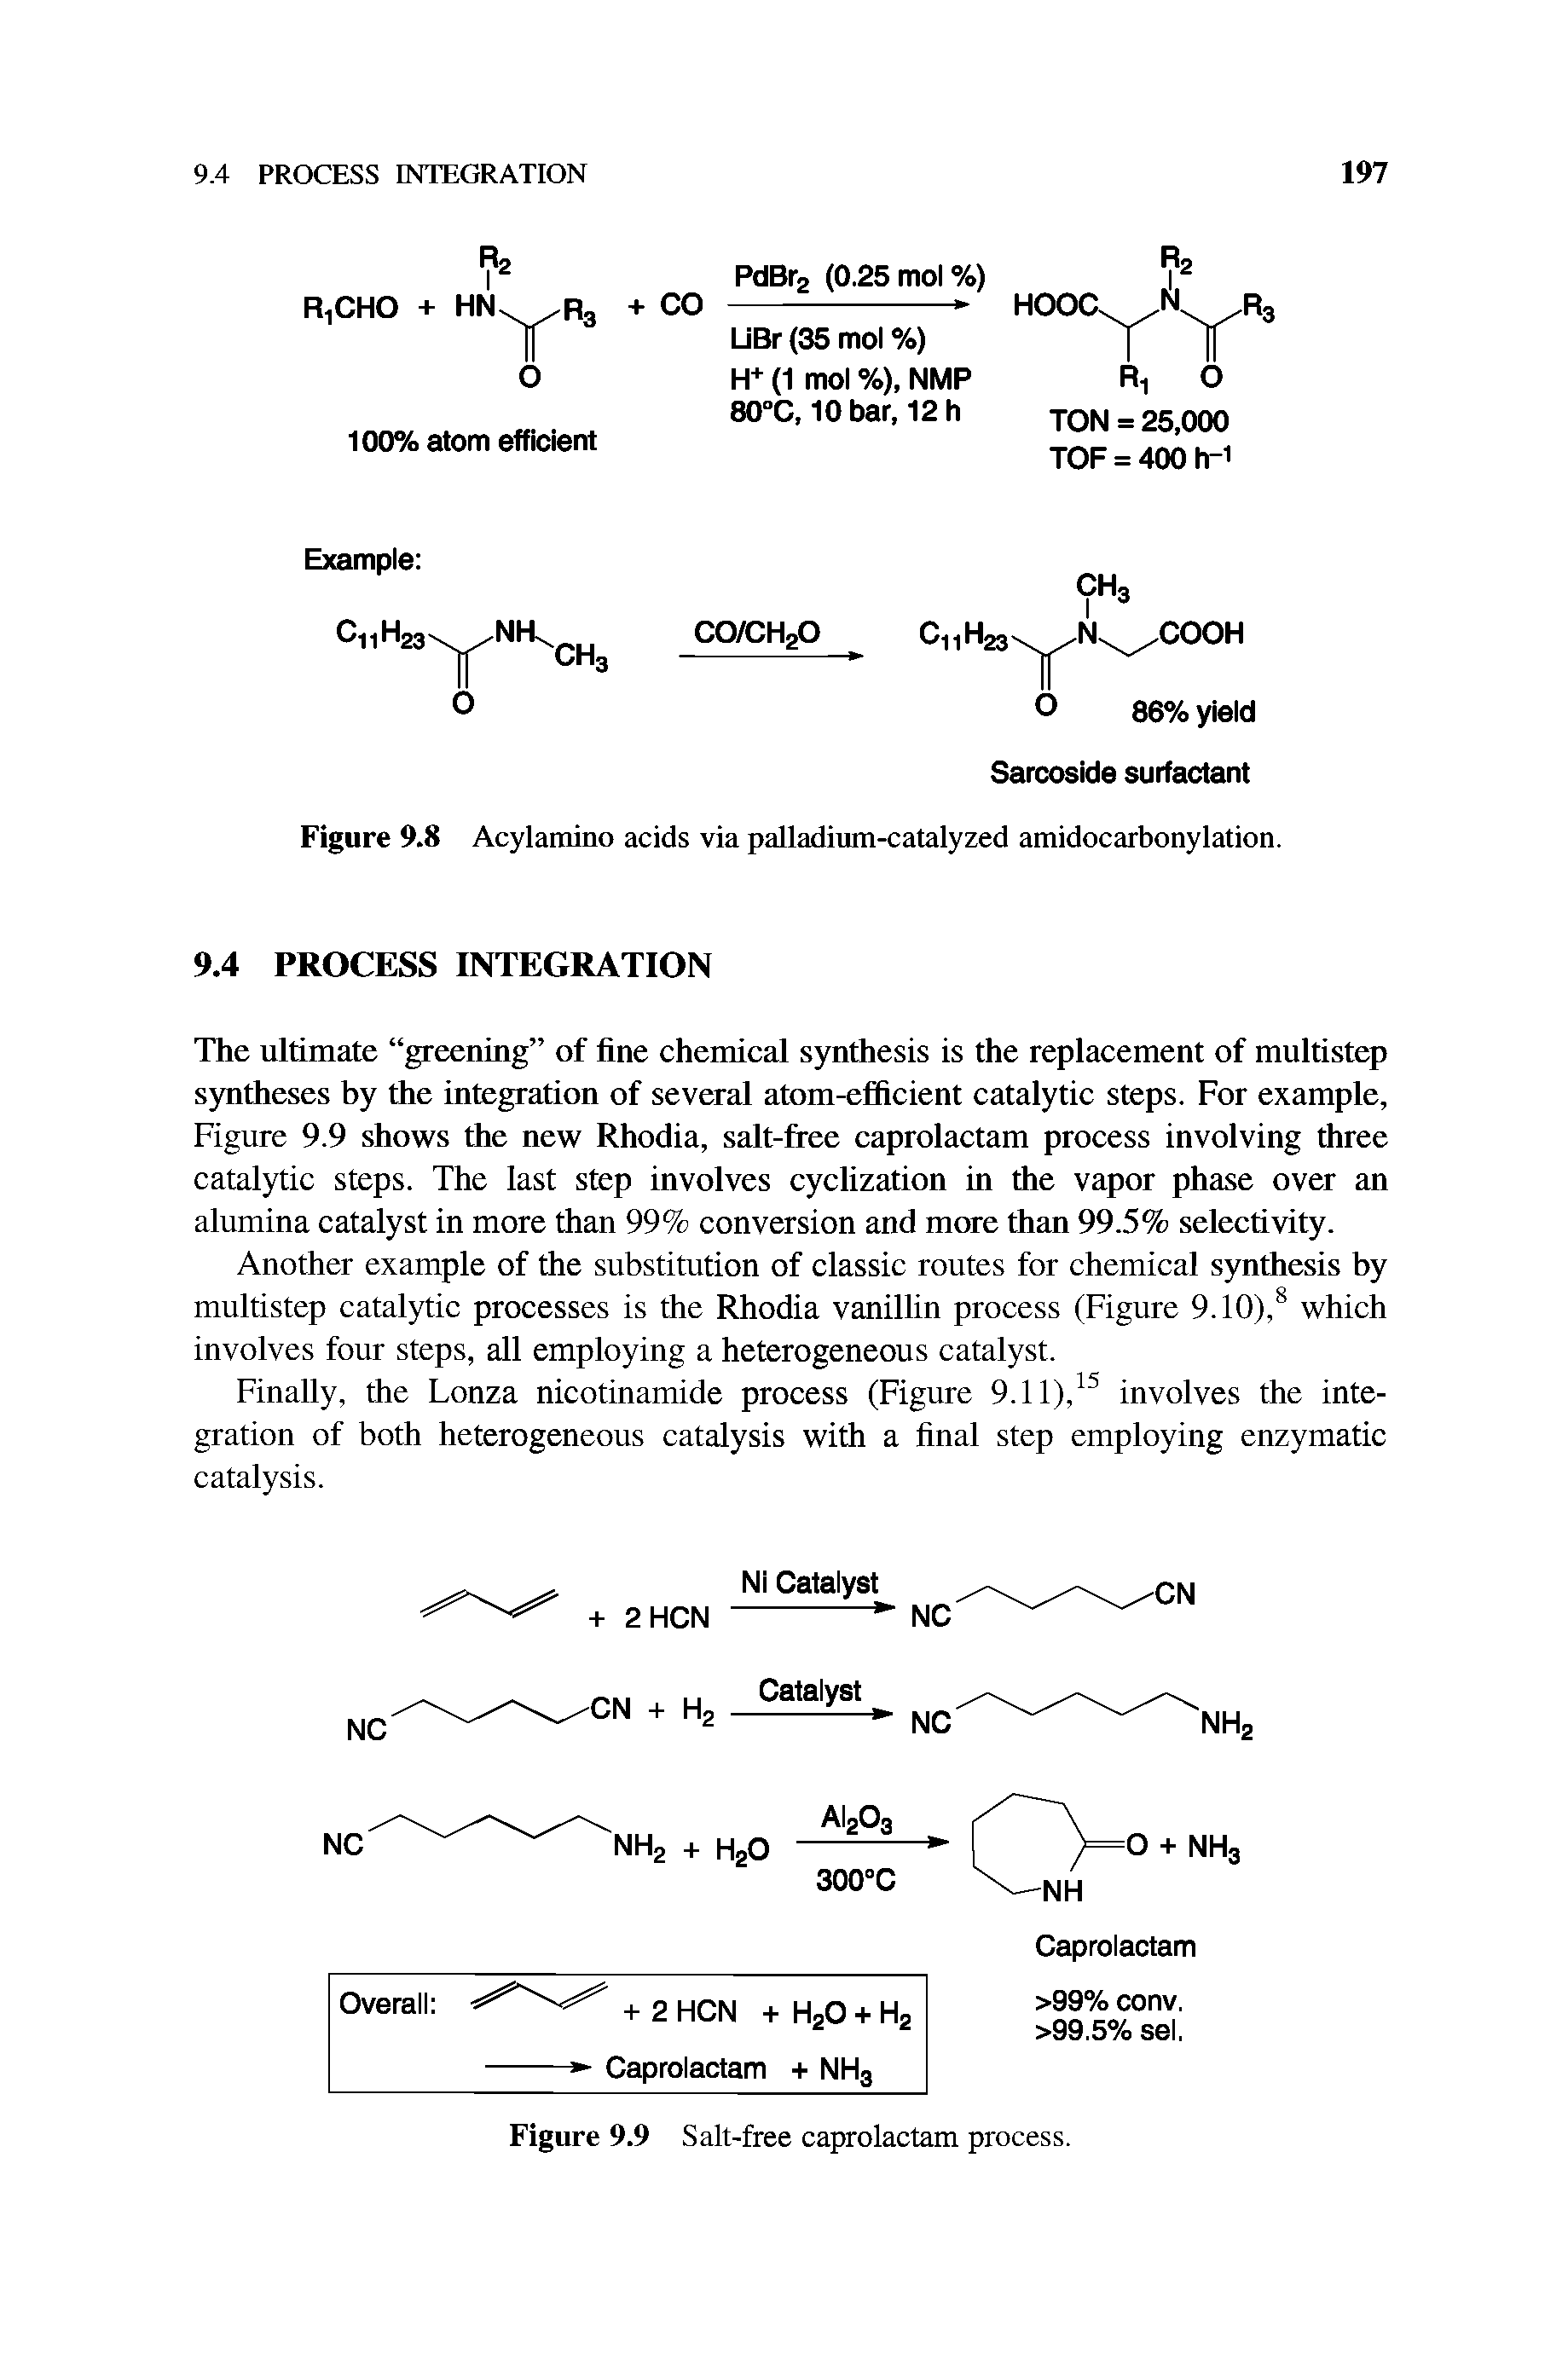 Figure 9.8 Acylamino acids via palladium-catalyzed amidocarbonylation.